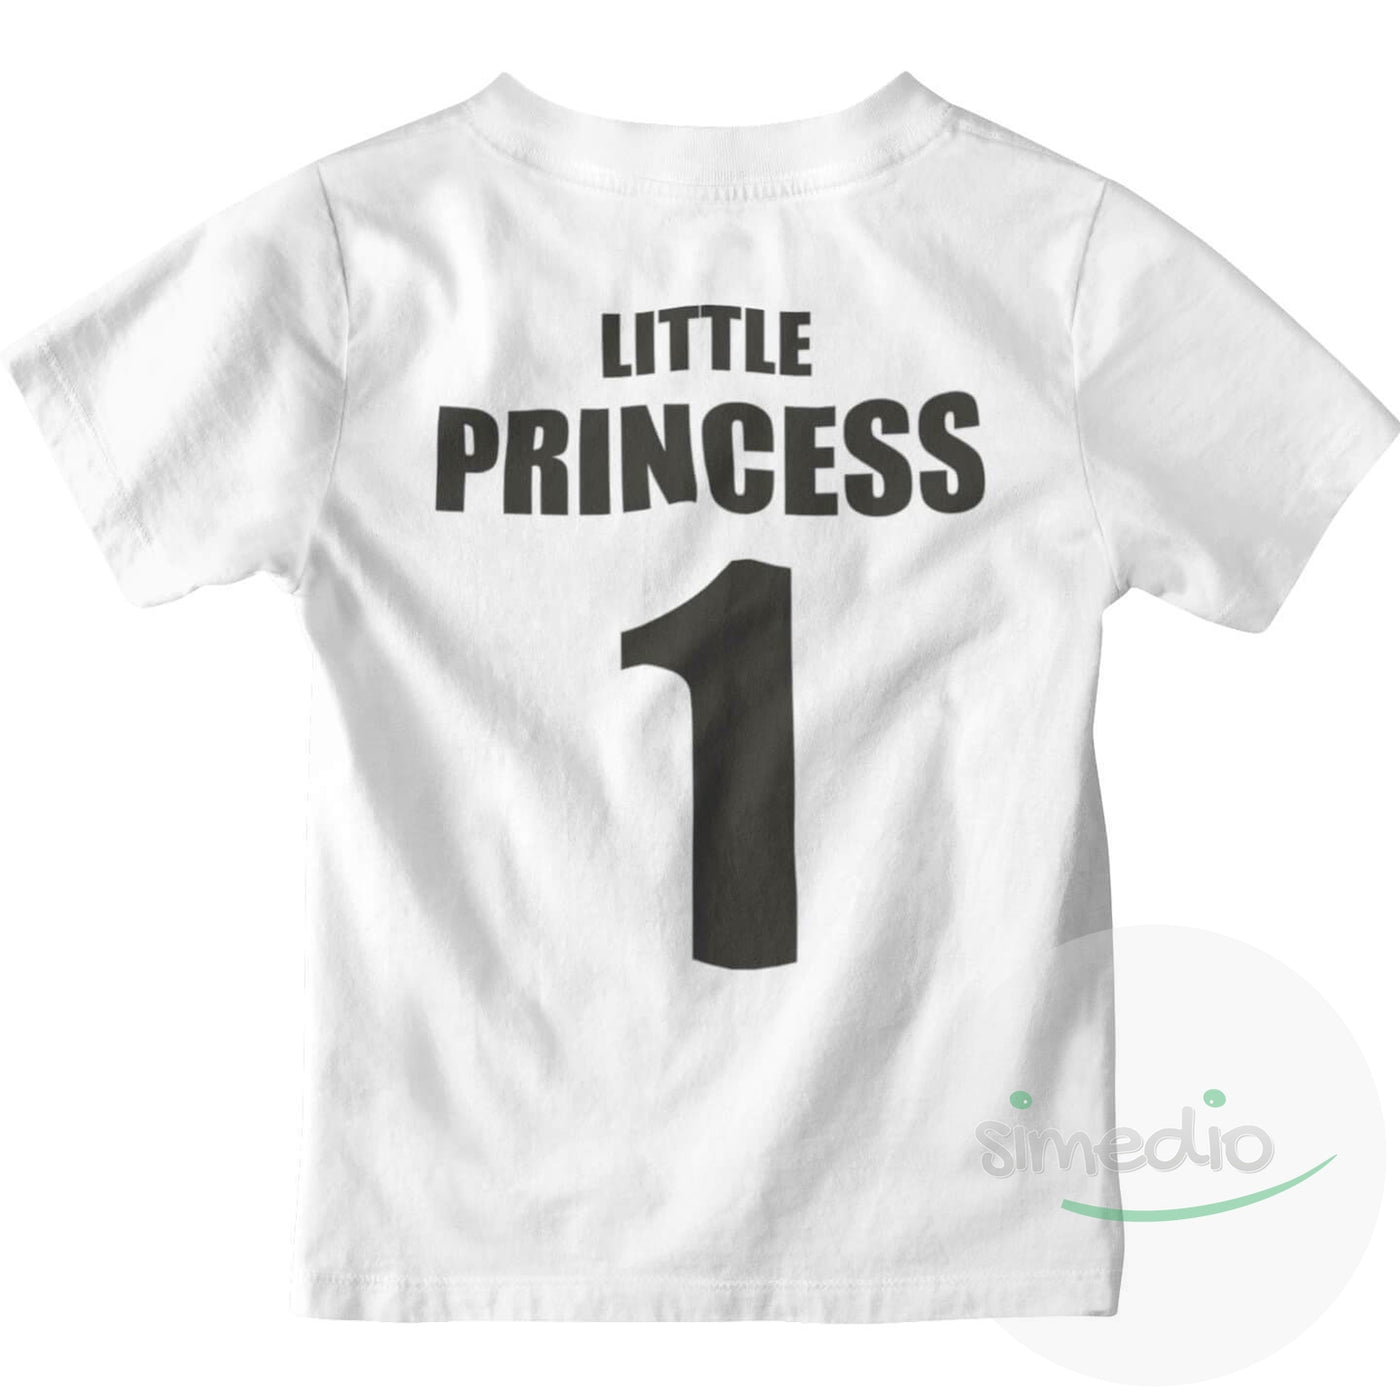 Tee shirt enfant original : PRINCE / PRINCESS, Little Princess, Blanc, 2 ans - SiMEDIO